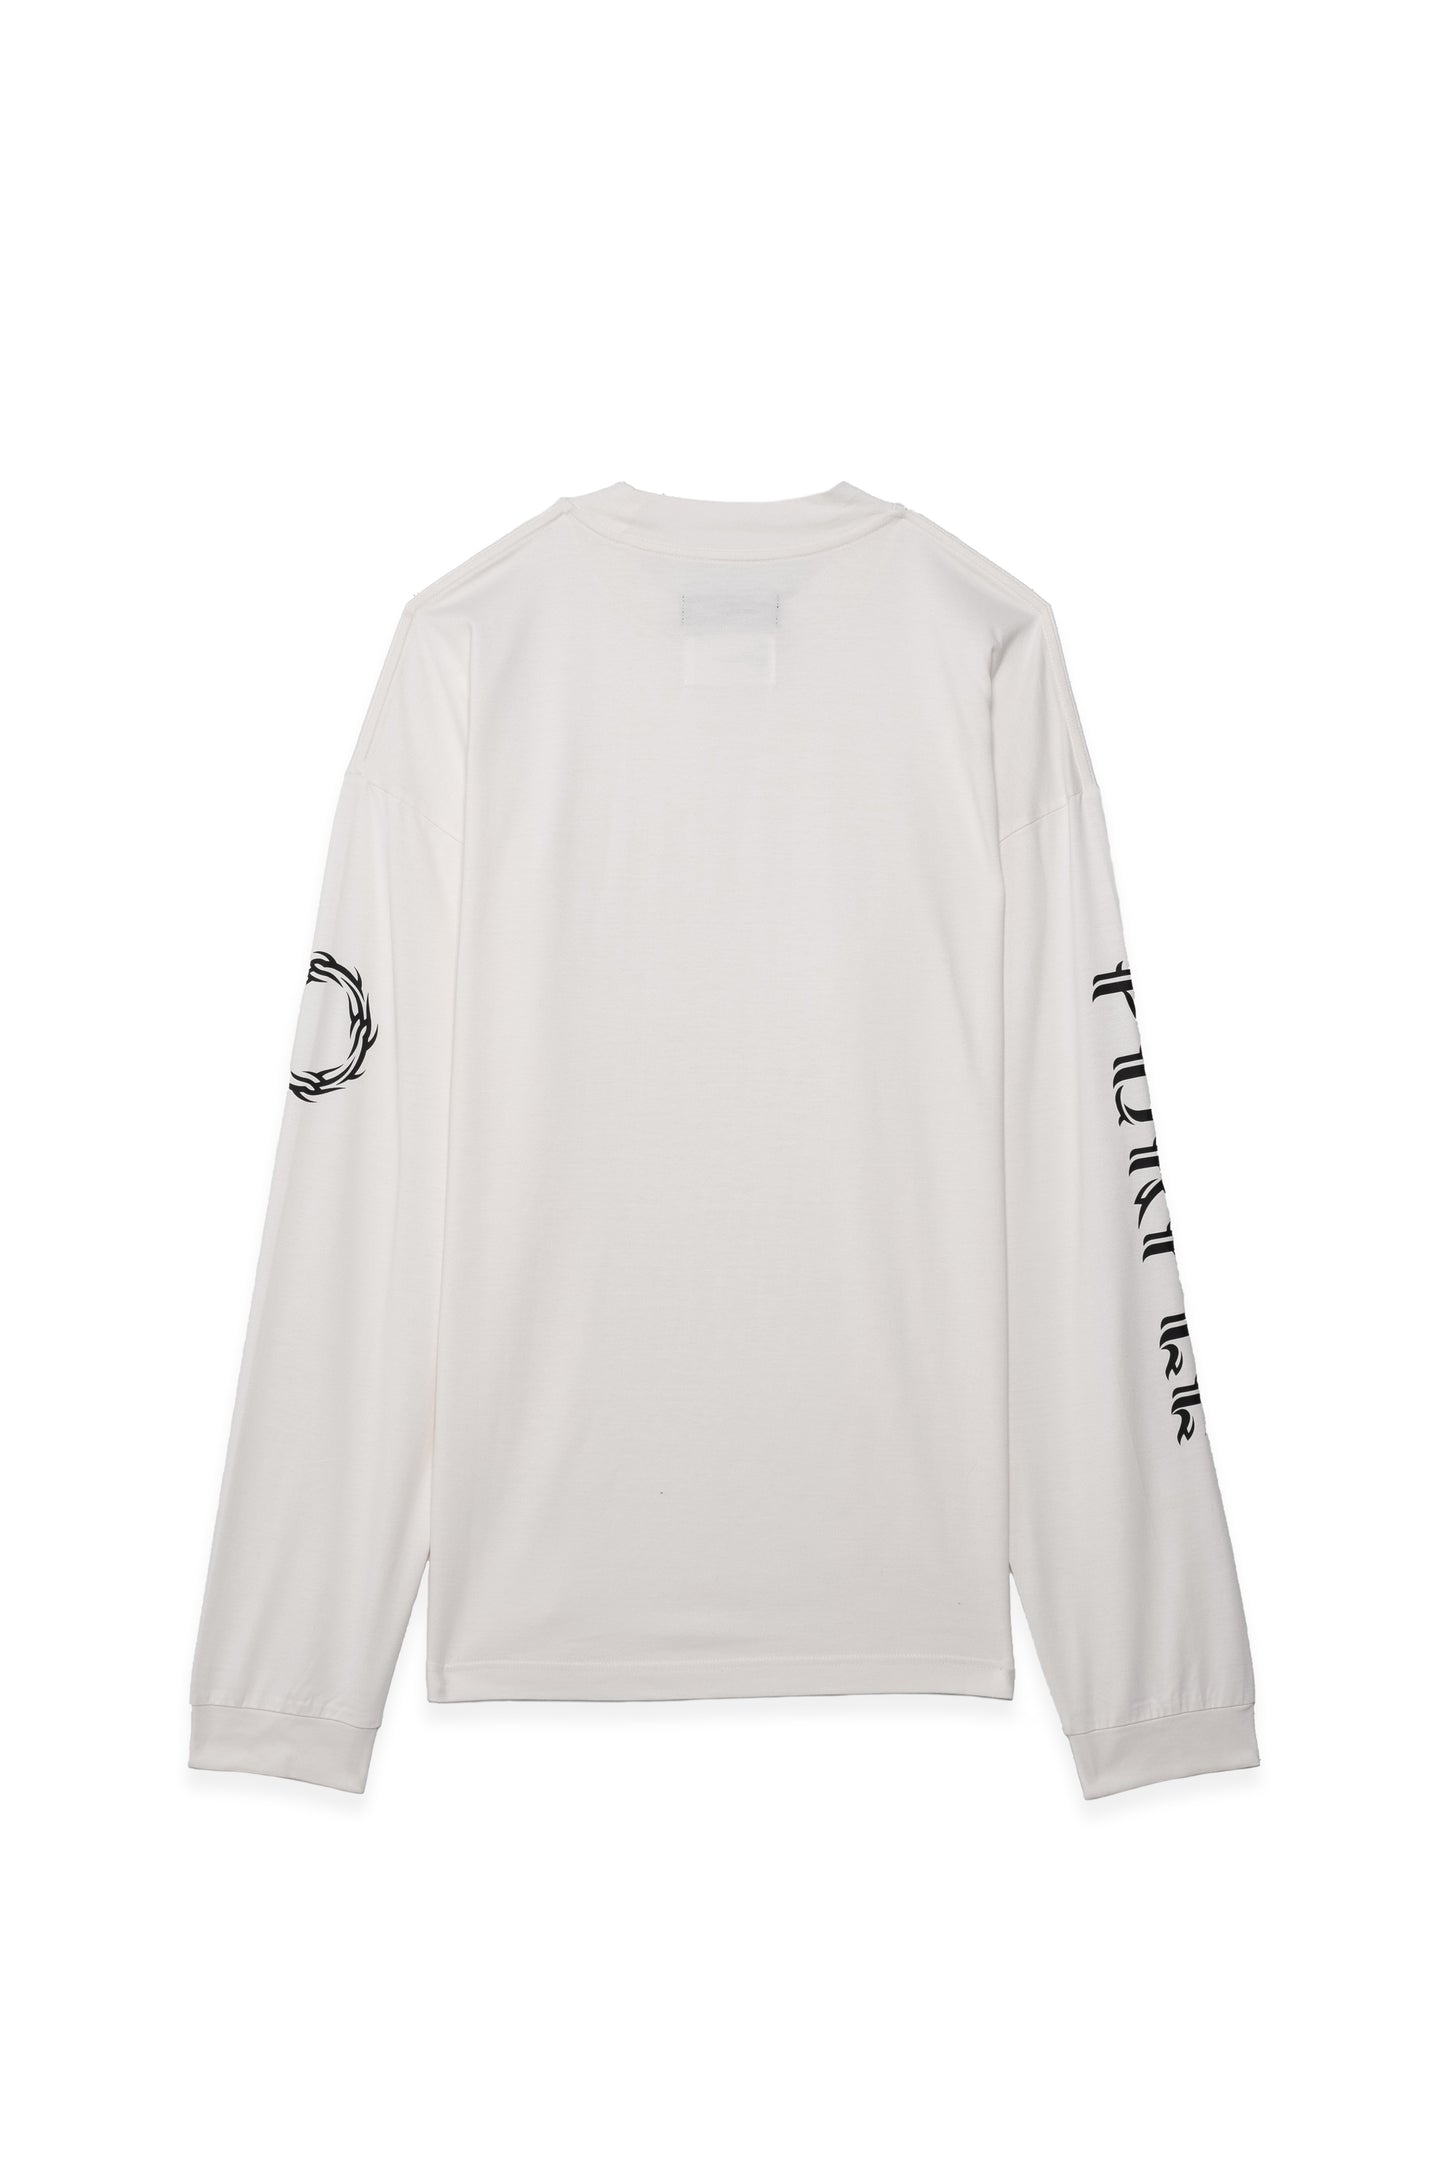 PURPLE BRAND - Men's Long Sleeve Shirt - Style No. P201 - Off White Acid Wash - Back